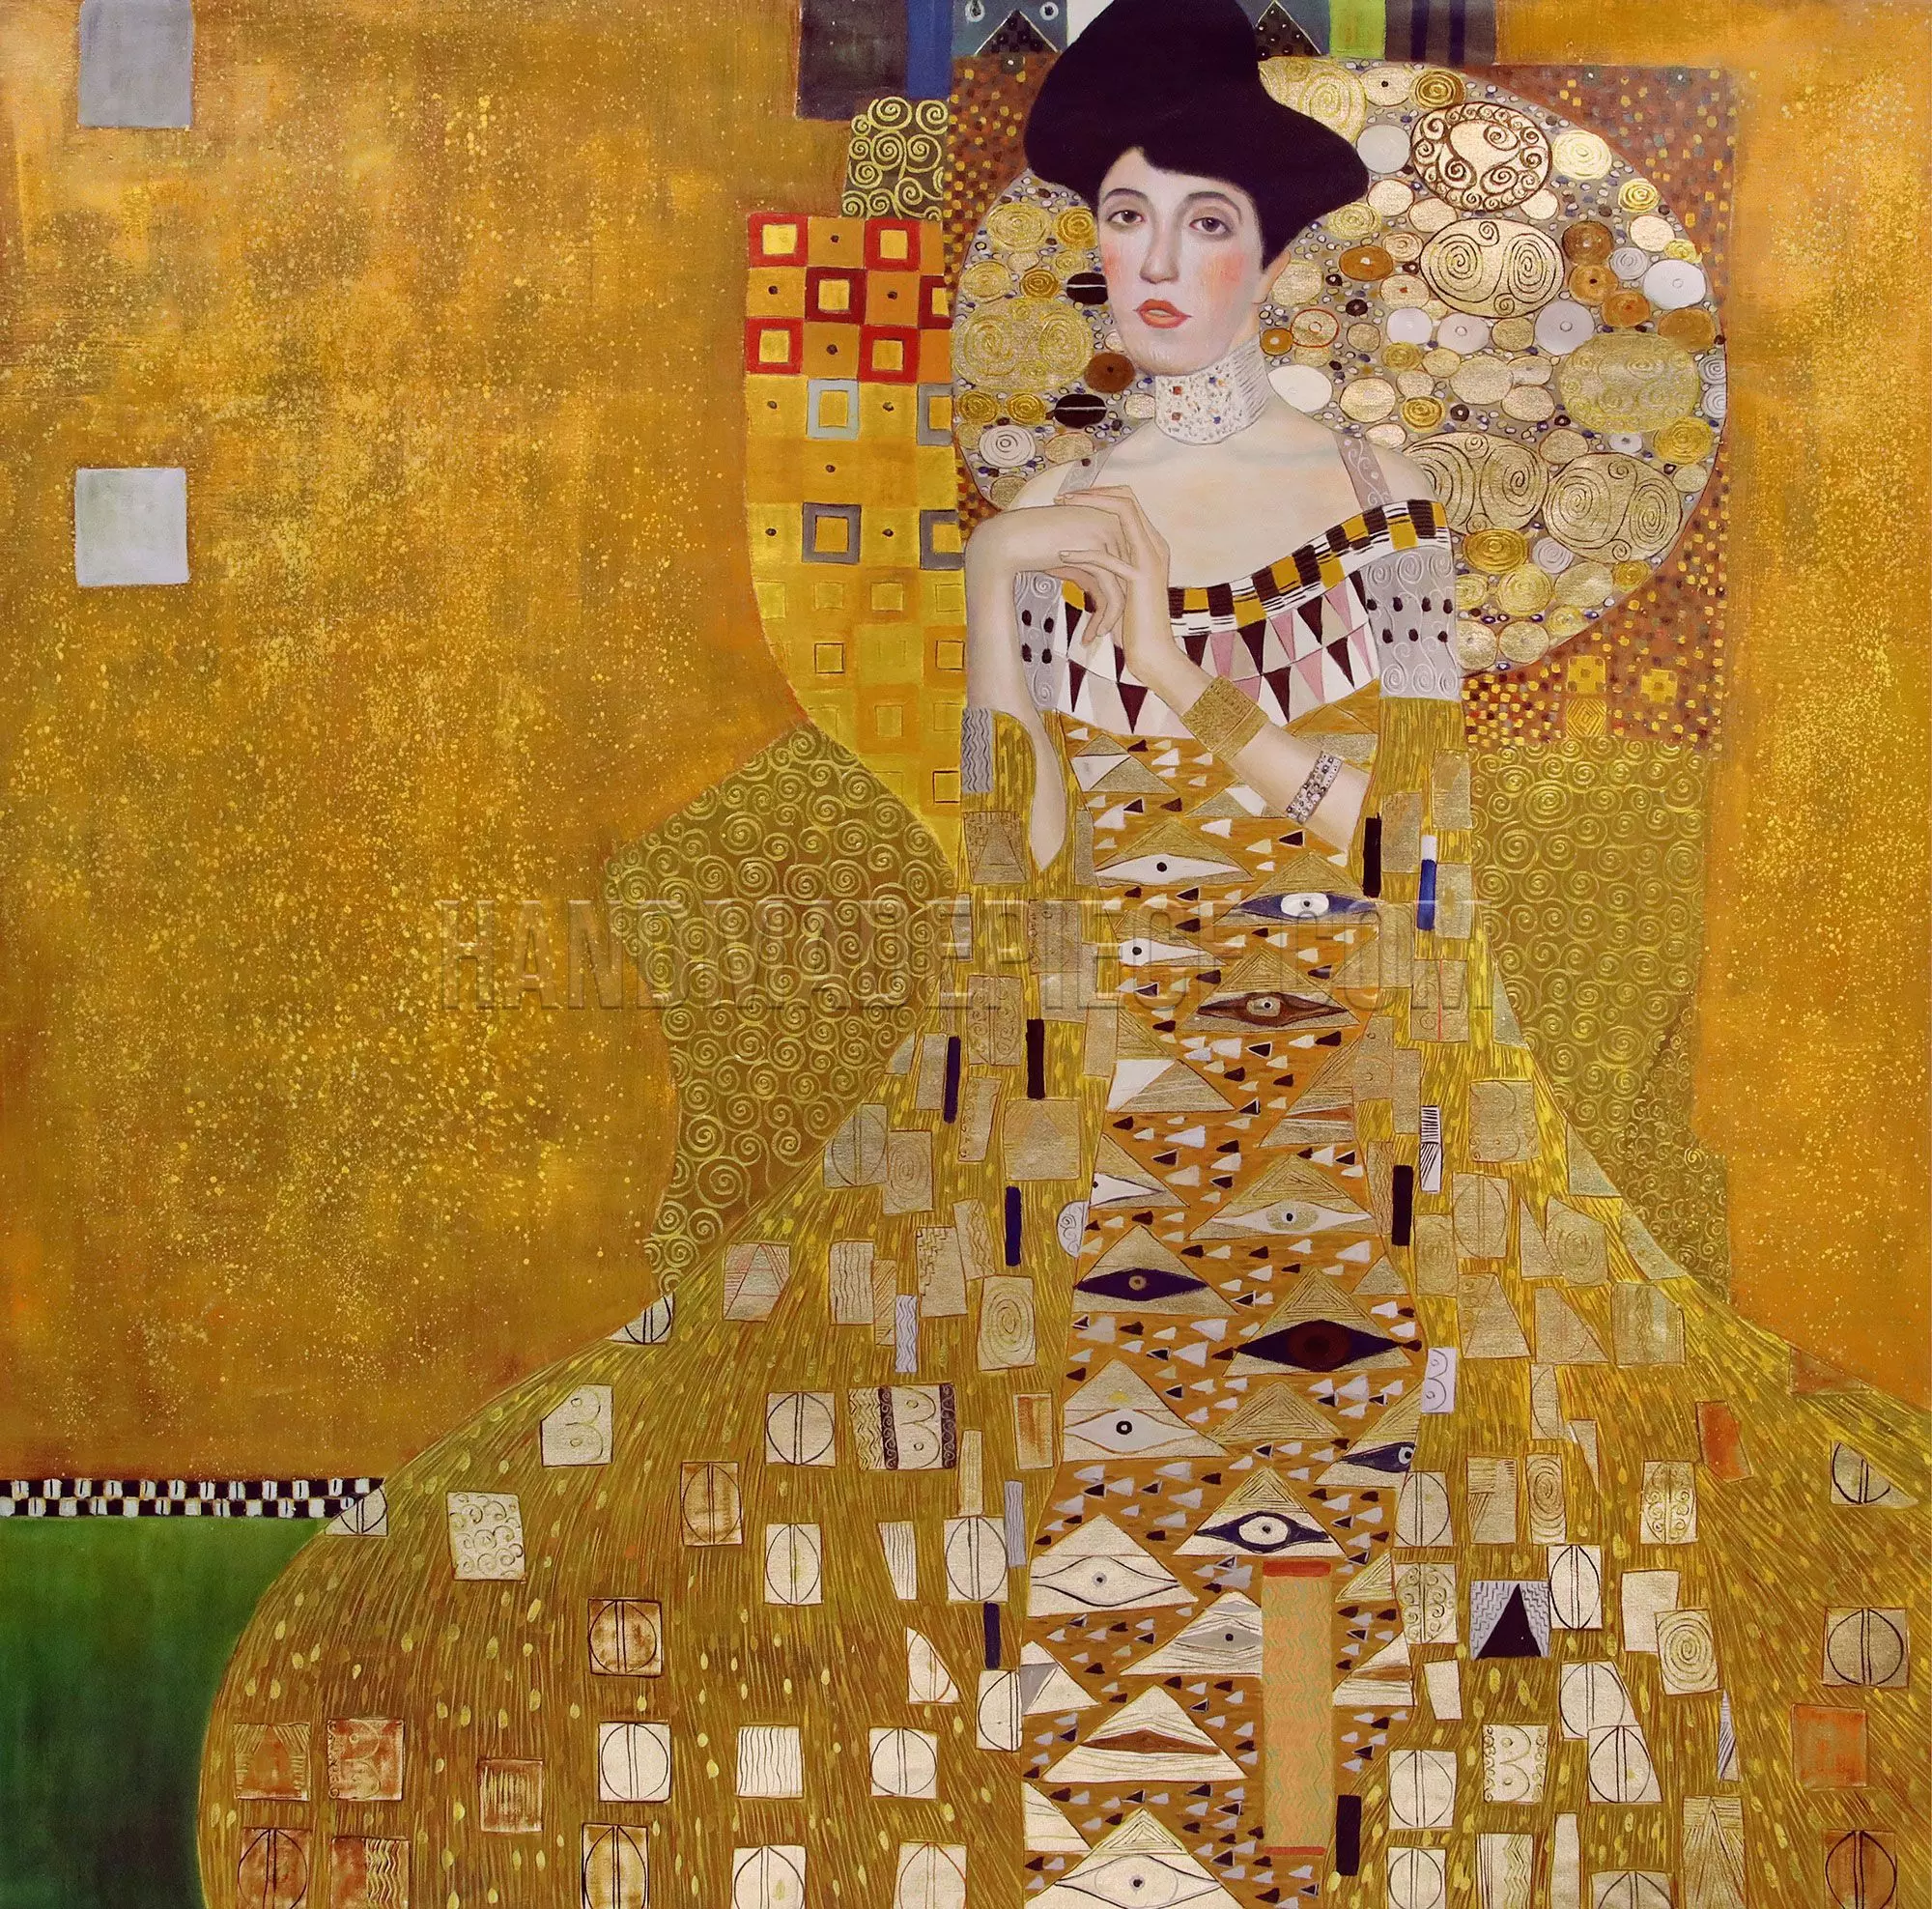   Arteum Champán Cristal De Adele Bloch Bauer Gustav Klimt,  66 – 926 – 75 – 7 